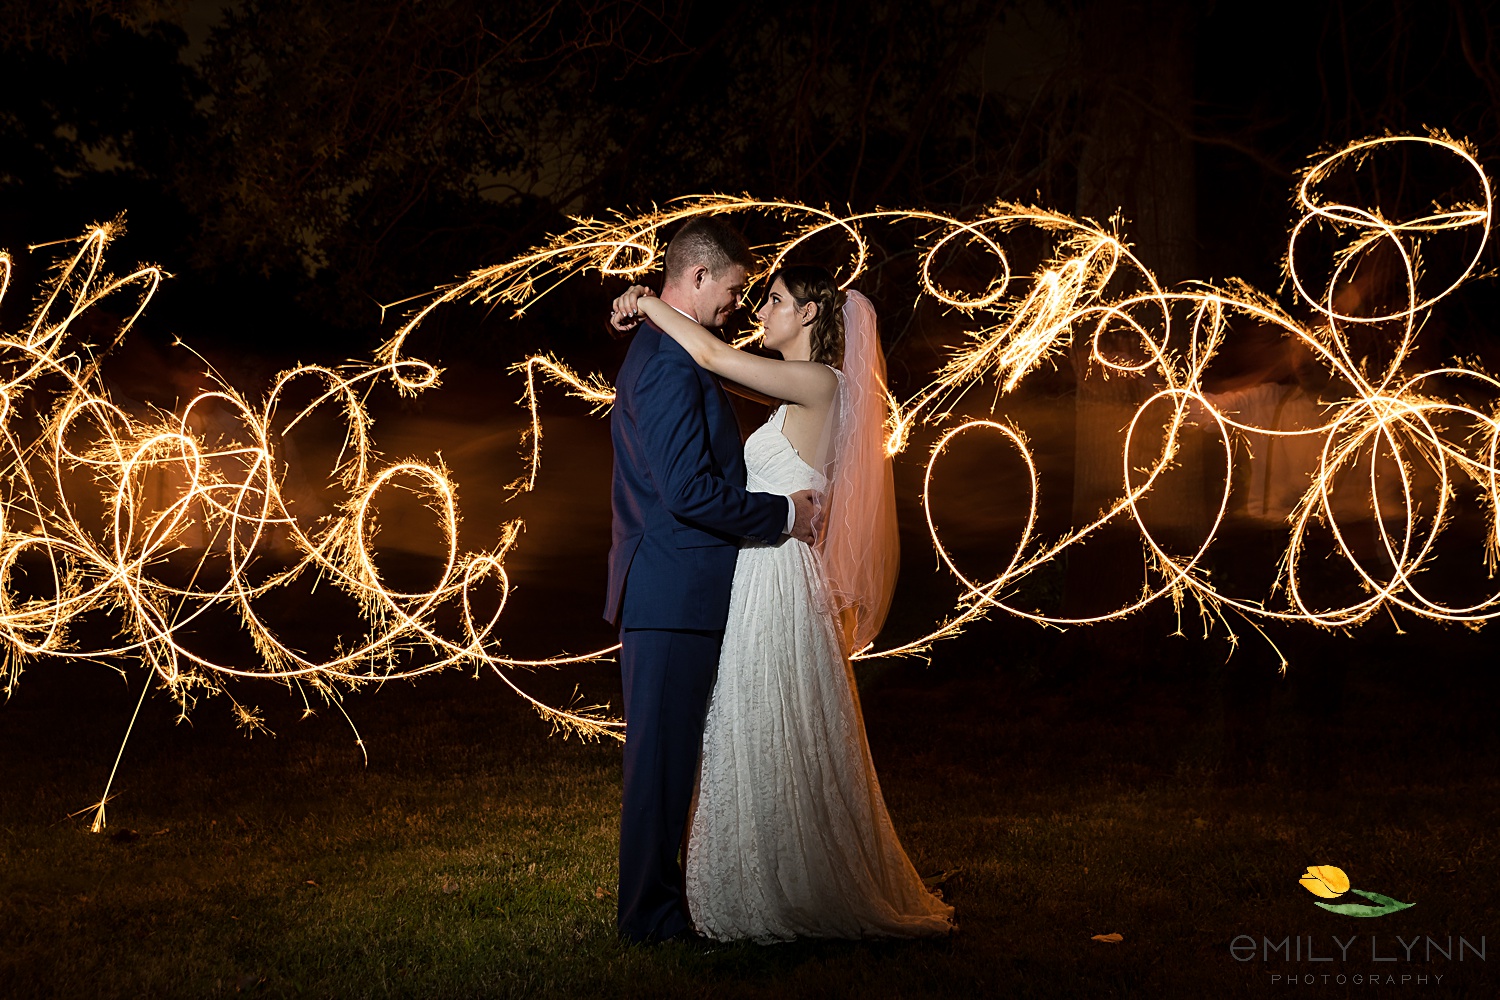 Light play with sparklers. Wedding-Photos-at-Enchanted-Acres-KC-Wedding-Photographer-Emily-Lynn-Photography.